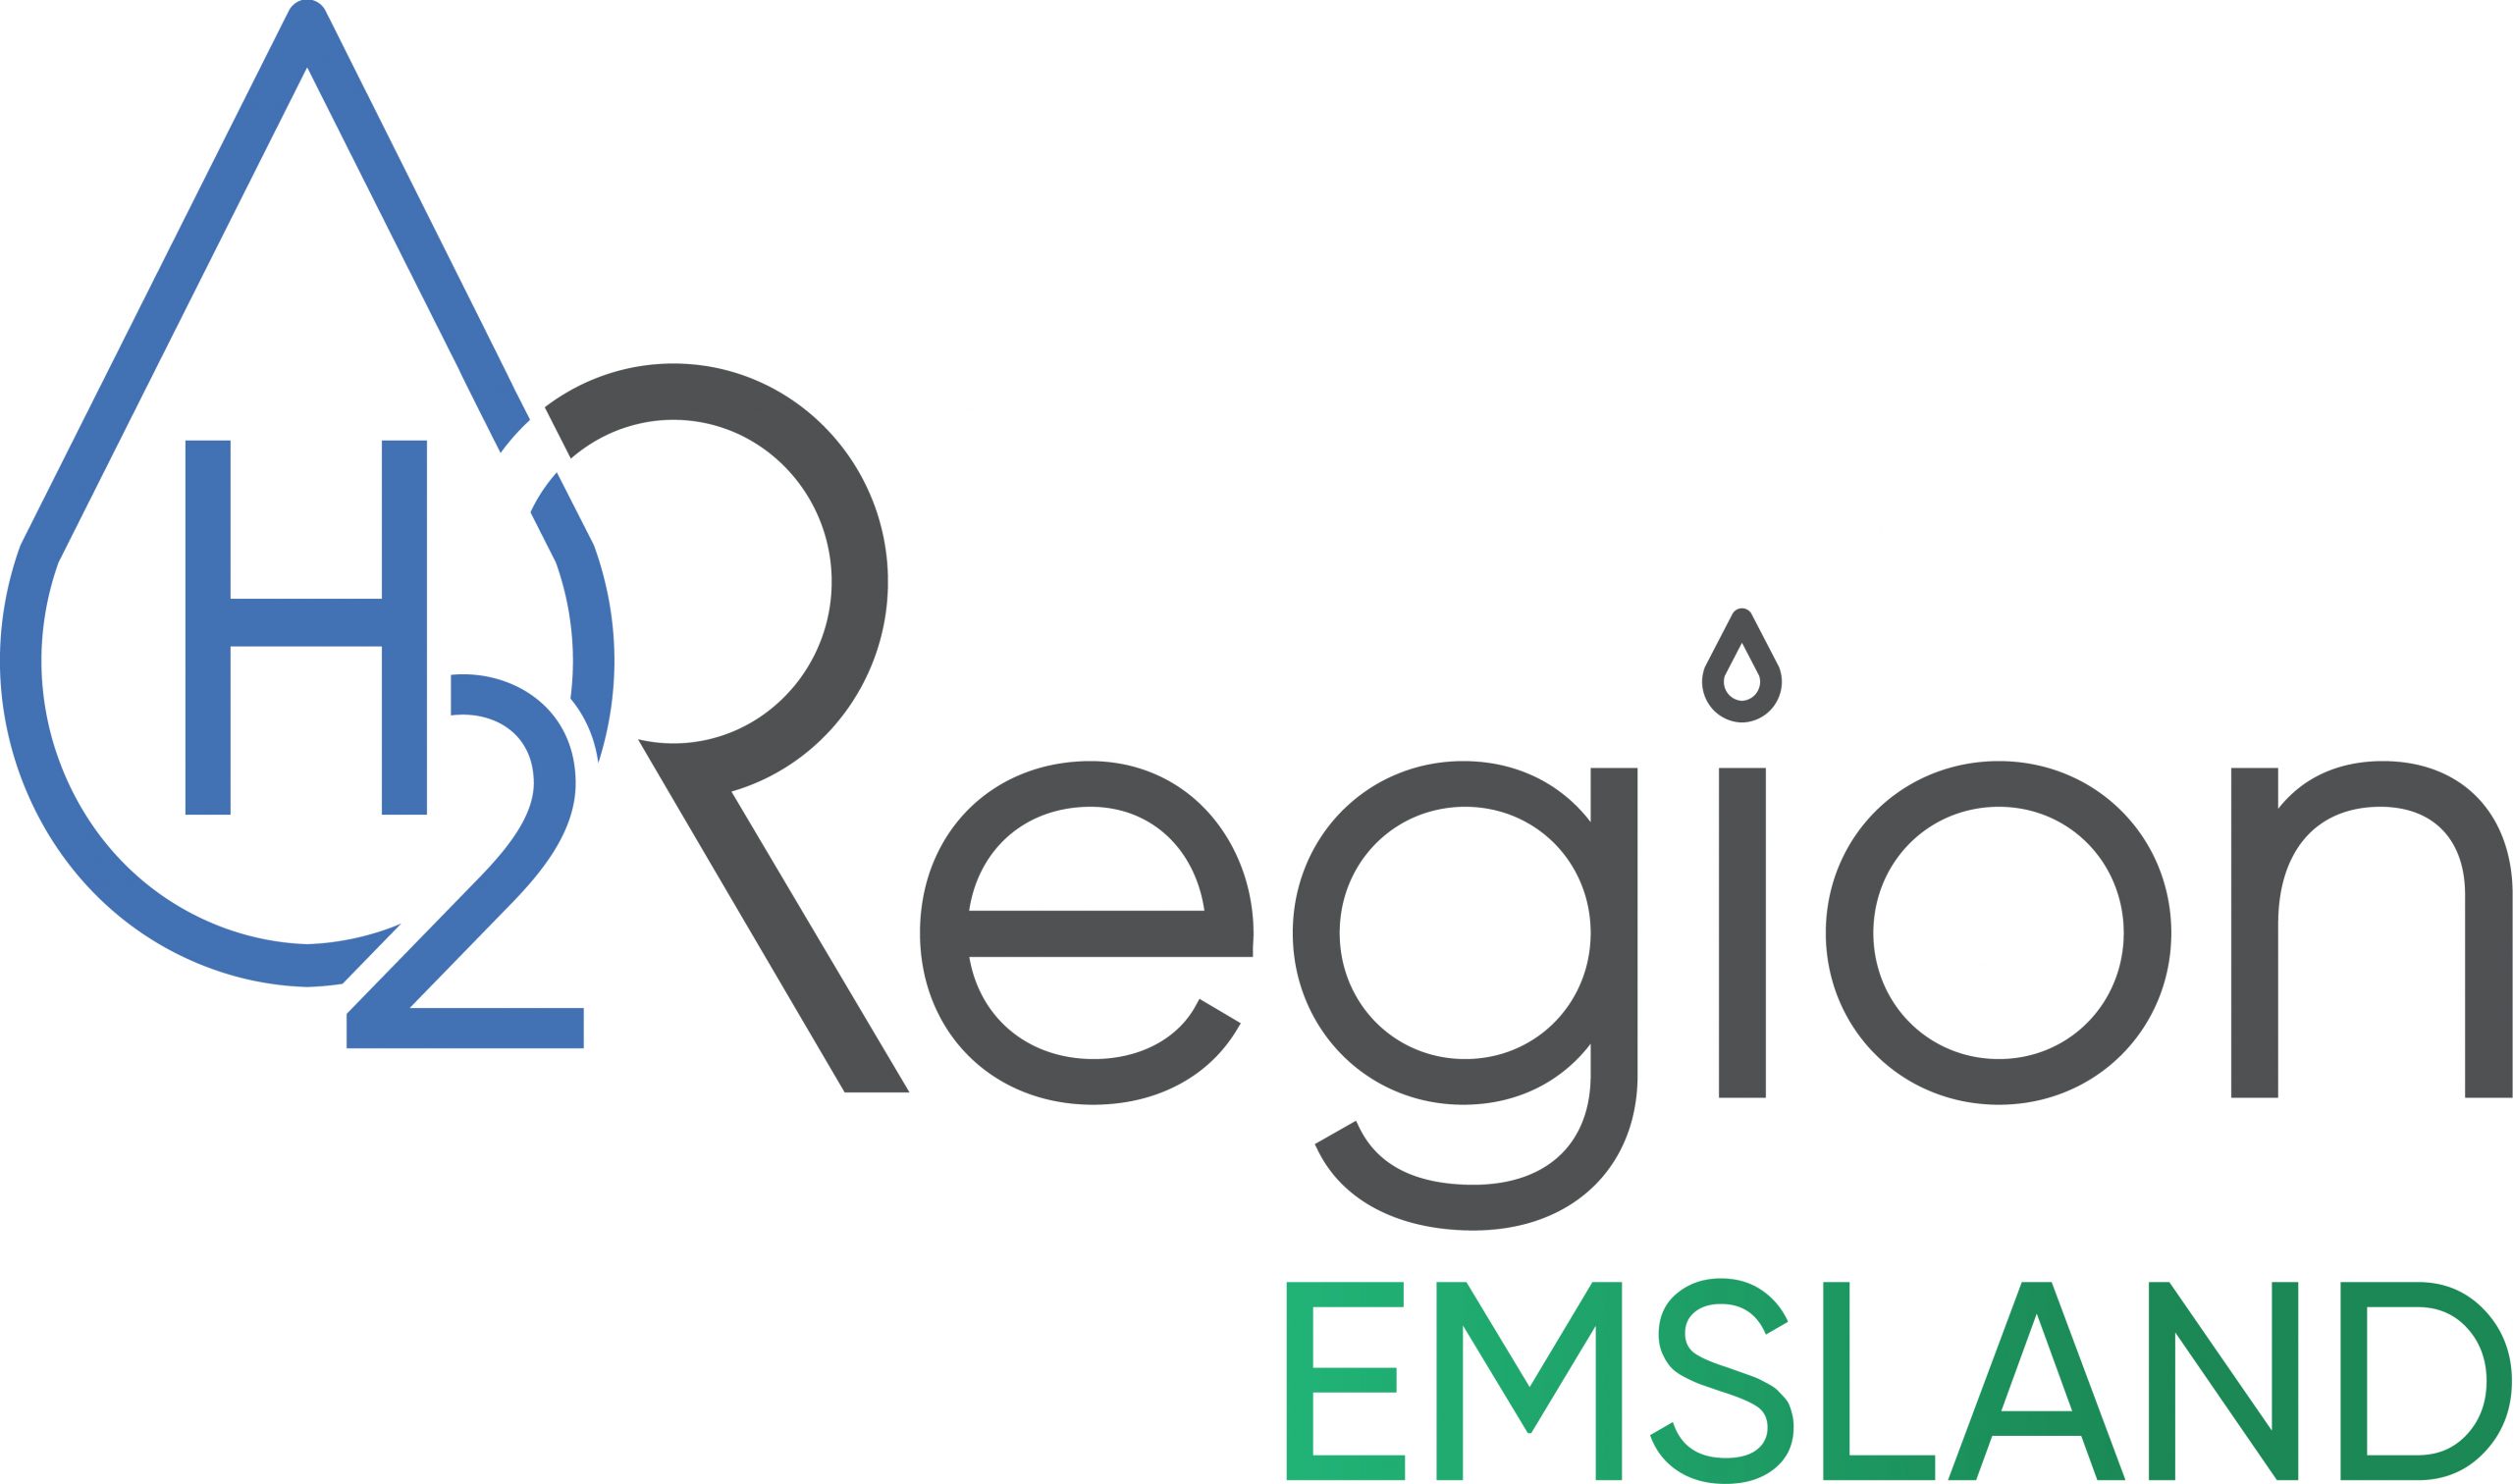 Logo H2 Region Emsland scaled